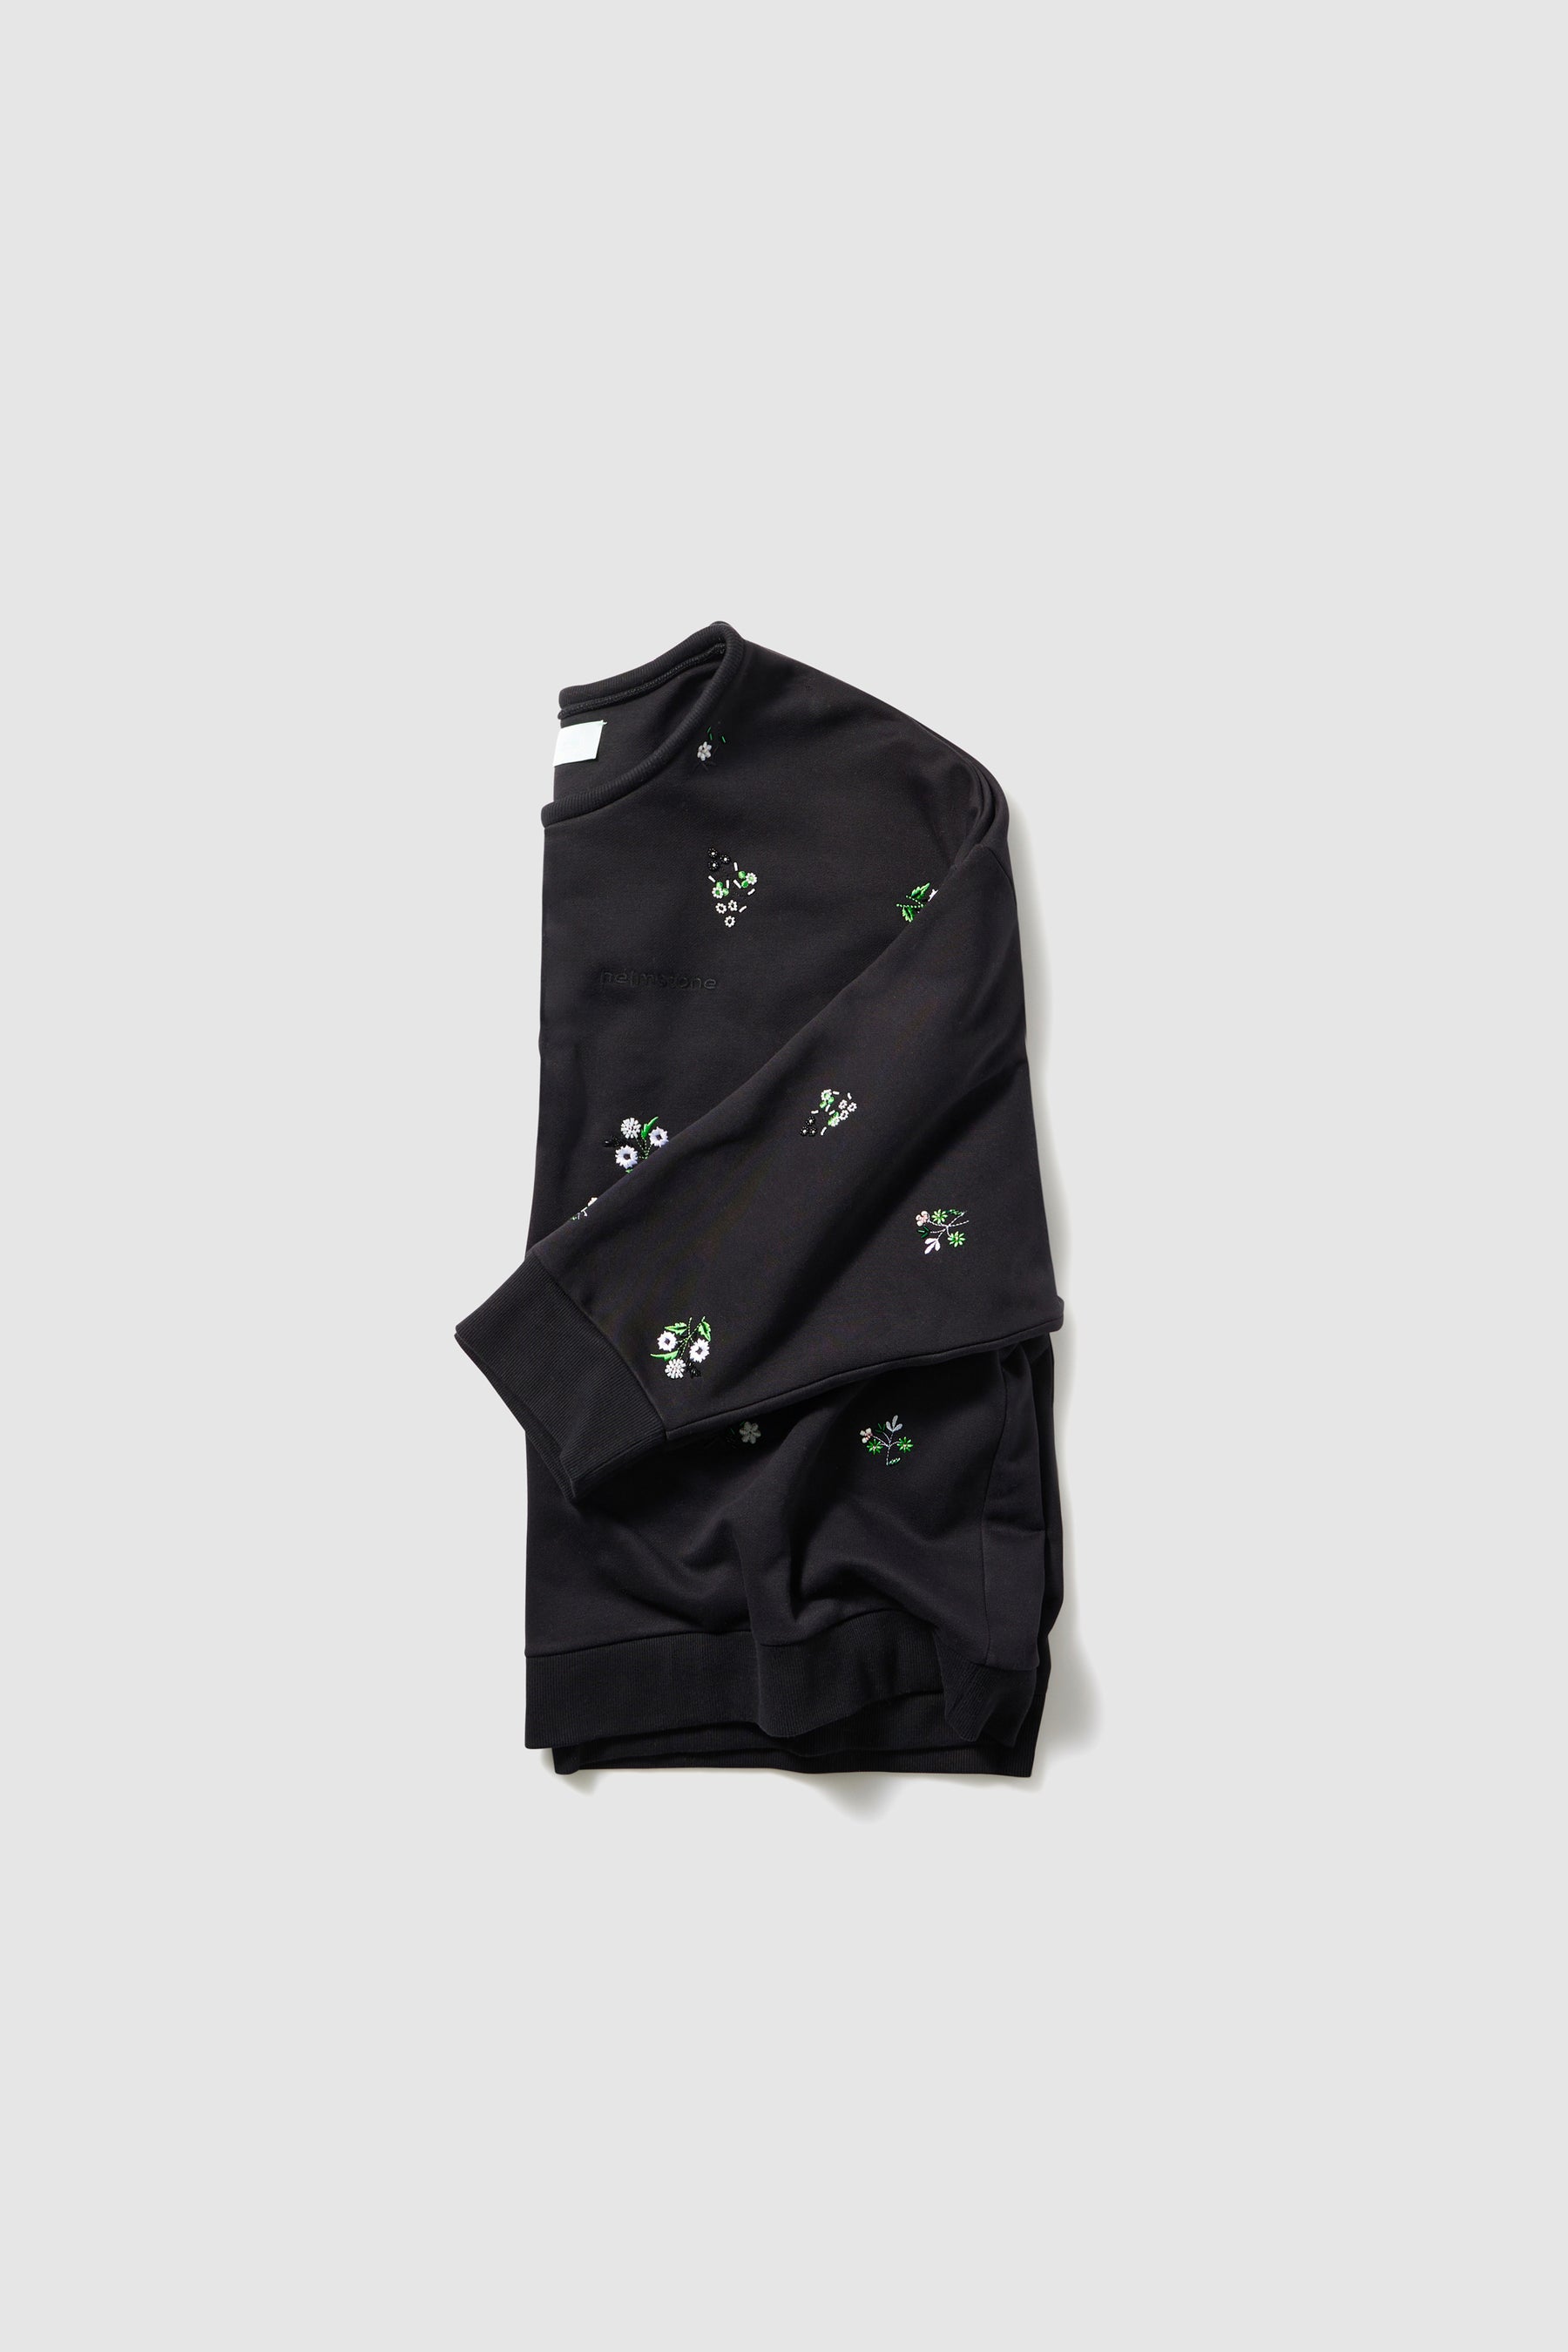 Harlem jumper in black beaded embroidered fleece